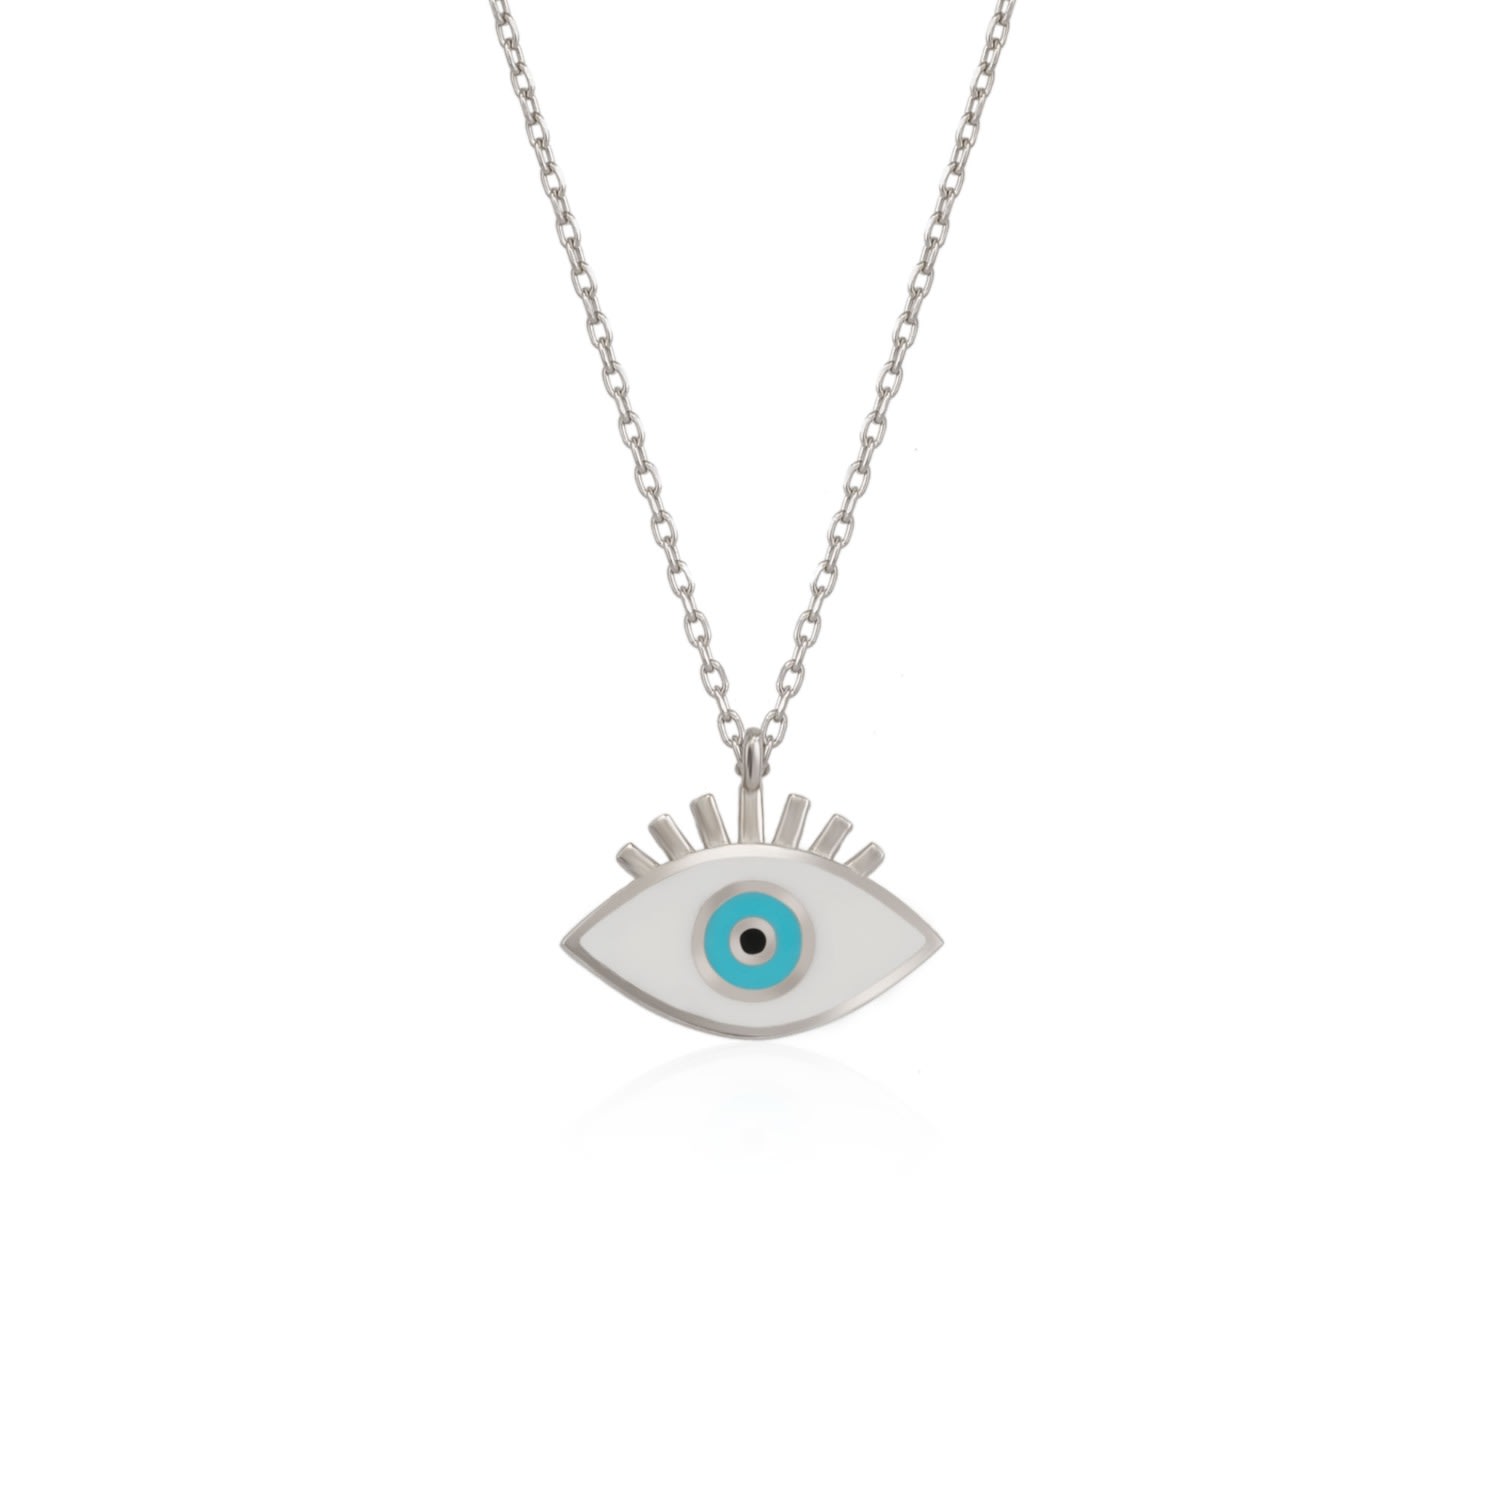 Spero London Women's Sterling Silver Evil Eye Eyelash Pendant Necklace - Silver